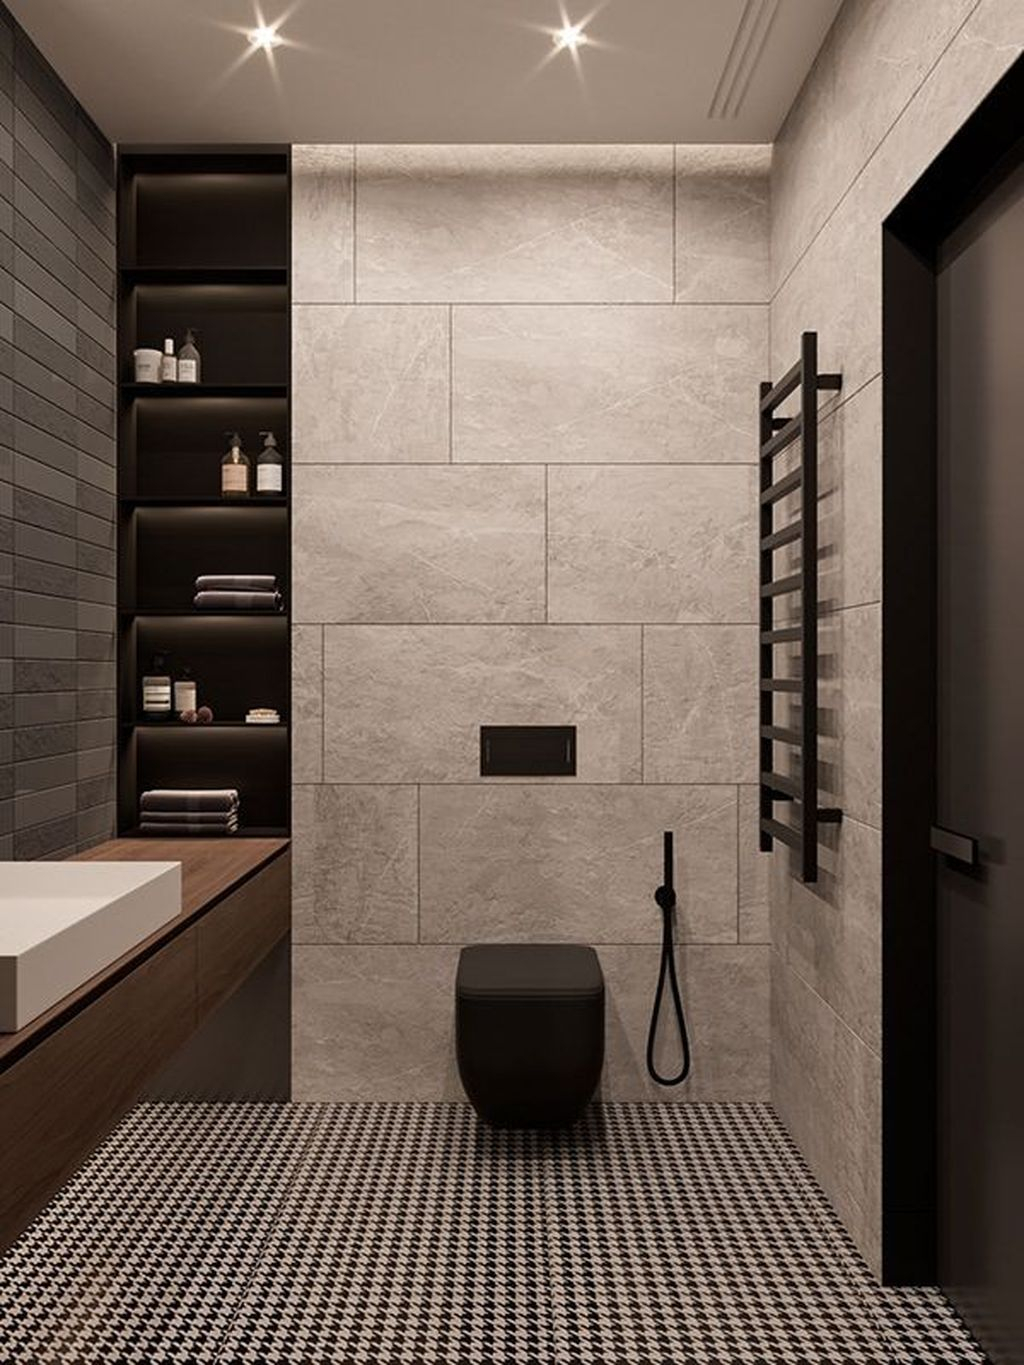 Latest Bathroom Design Ideas To Try Asap 30